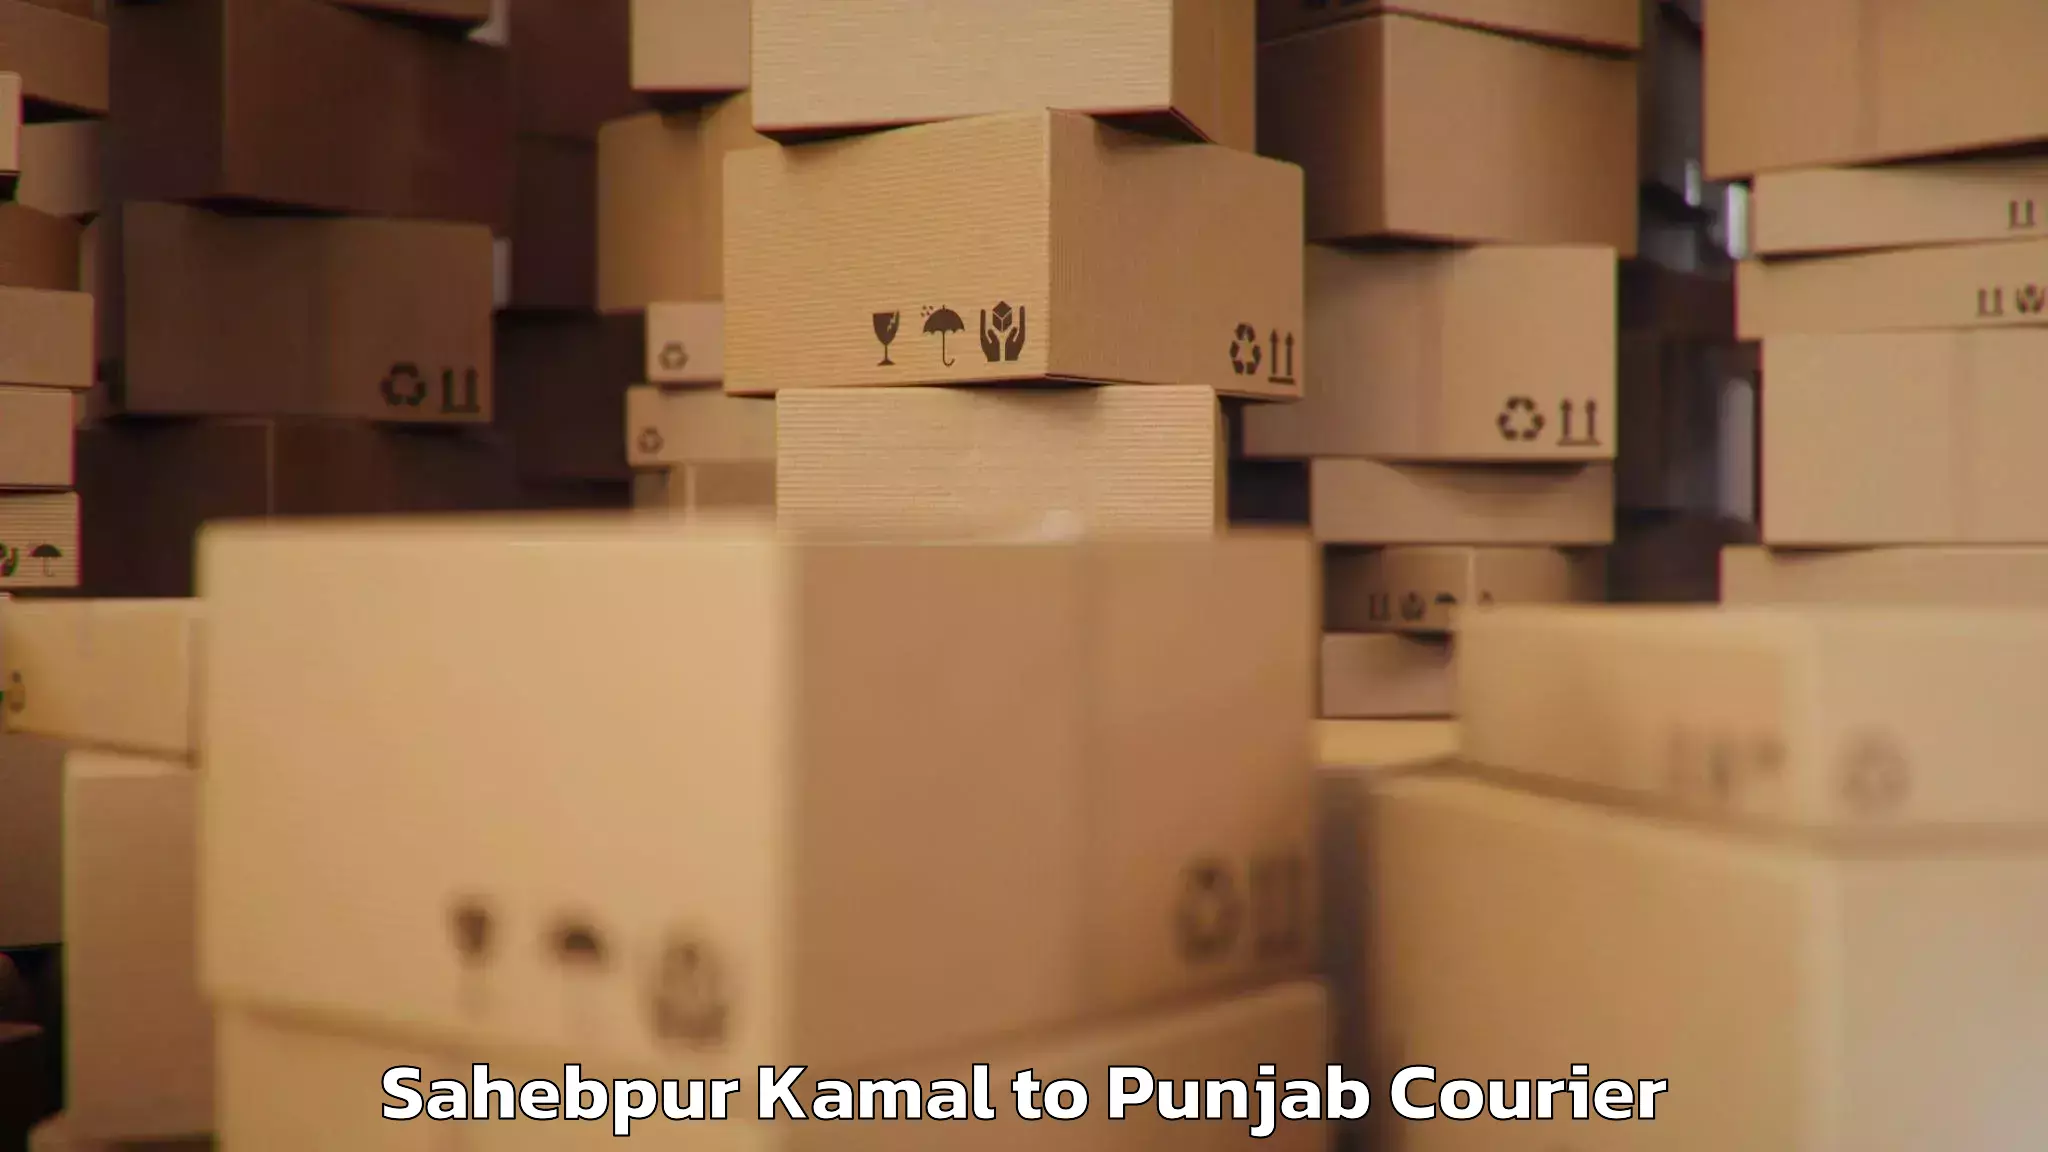 Luggage transport service Sahebpur Kamal to Punjab